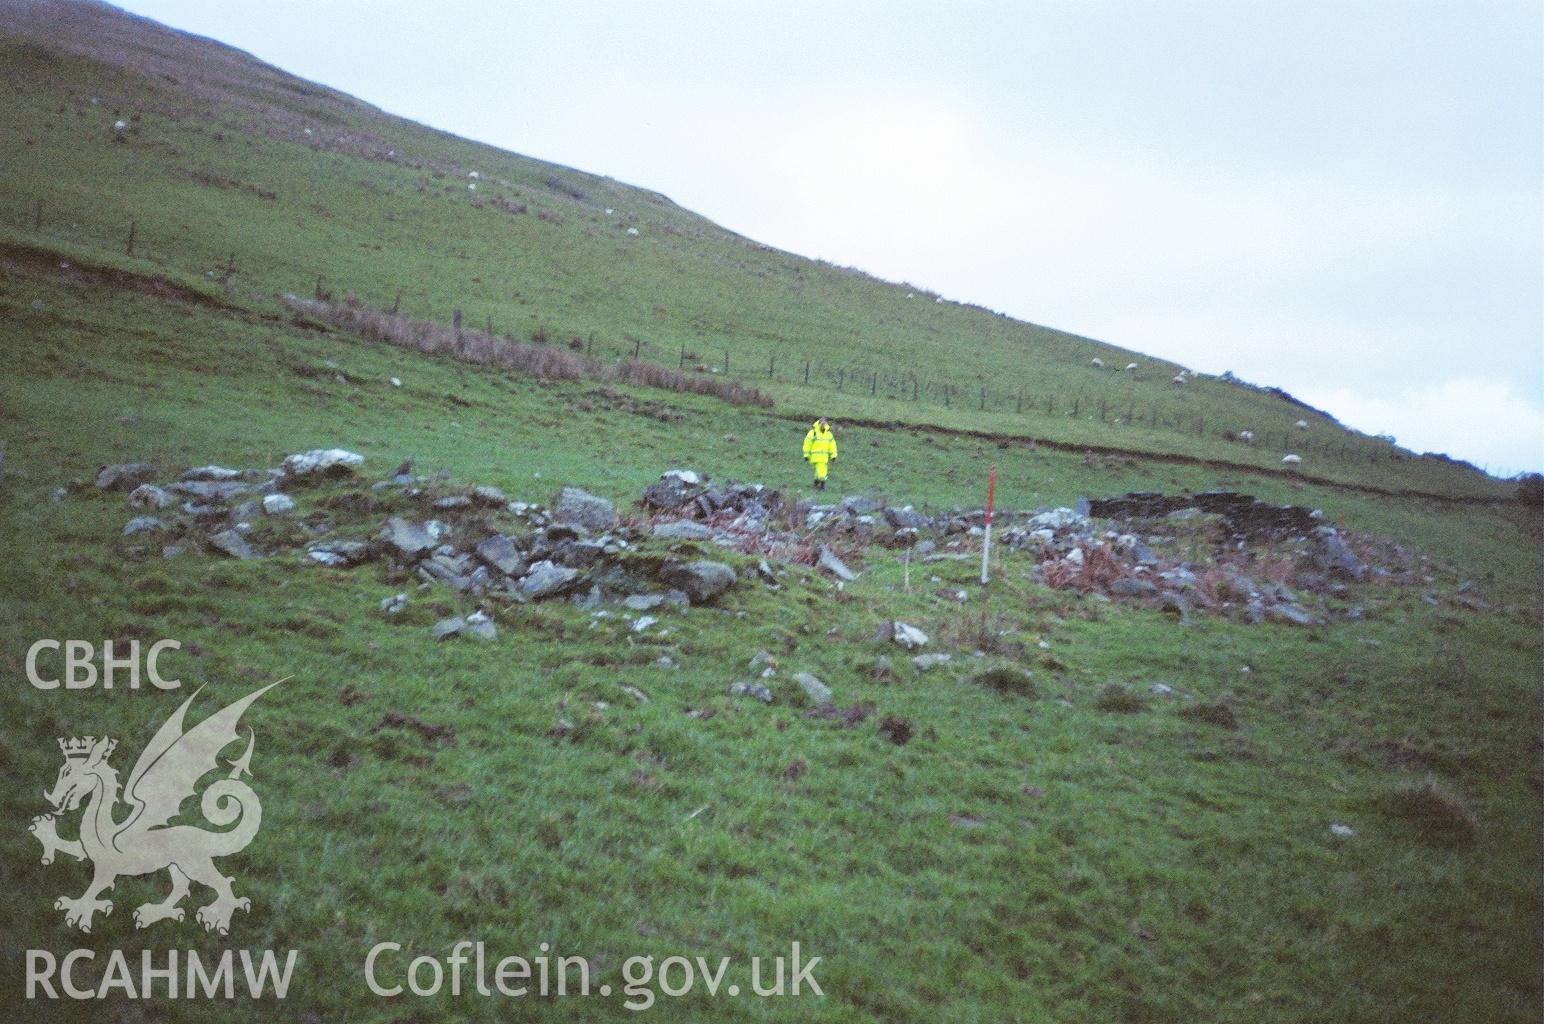 Digital colour photograph of Cwm Maen Gwynedd house taken on 23/11/2006 by A.C. Roseveare during the Berwyn North East Upland Survey by Archaeophysica.